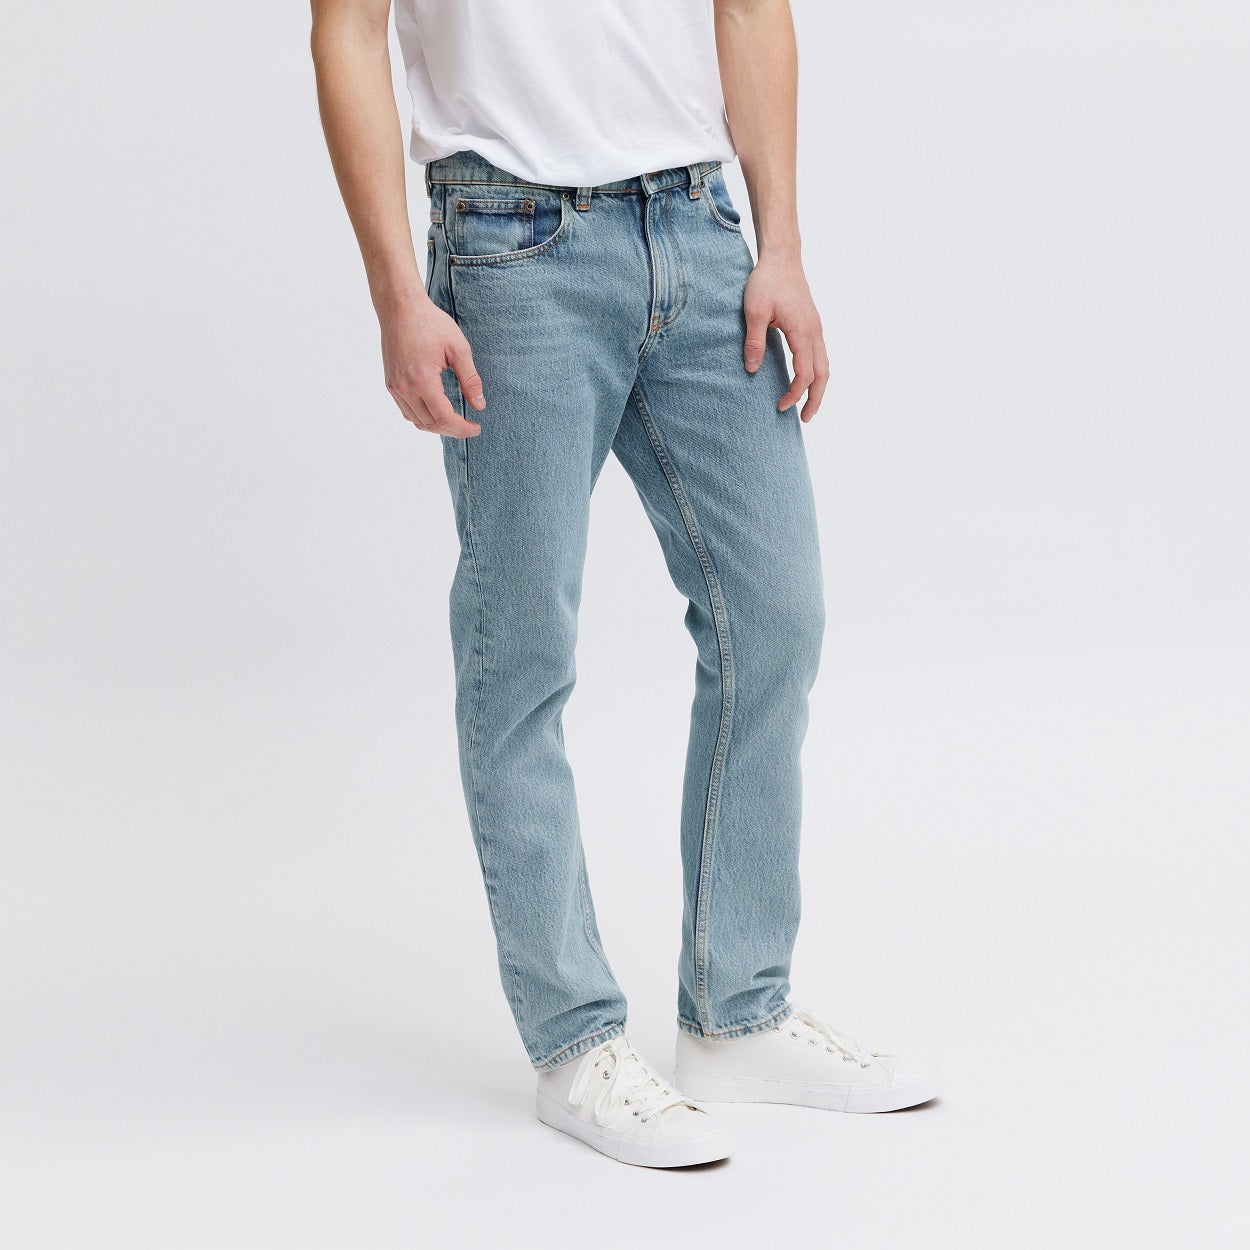 Men's organic jeans